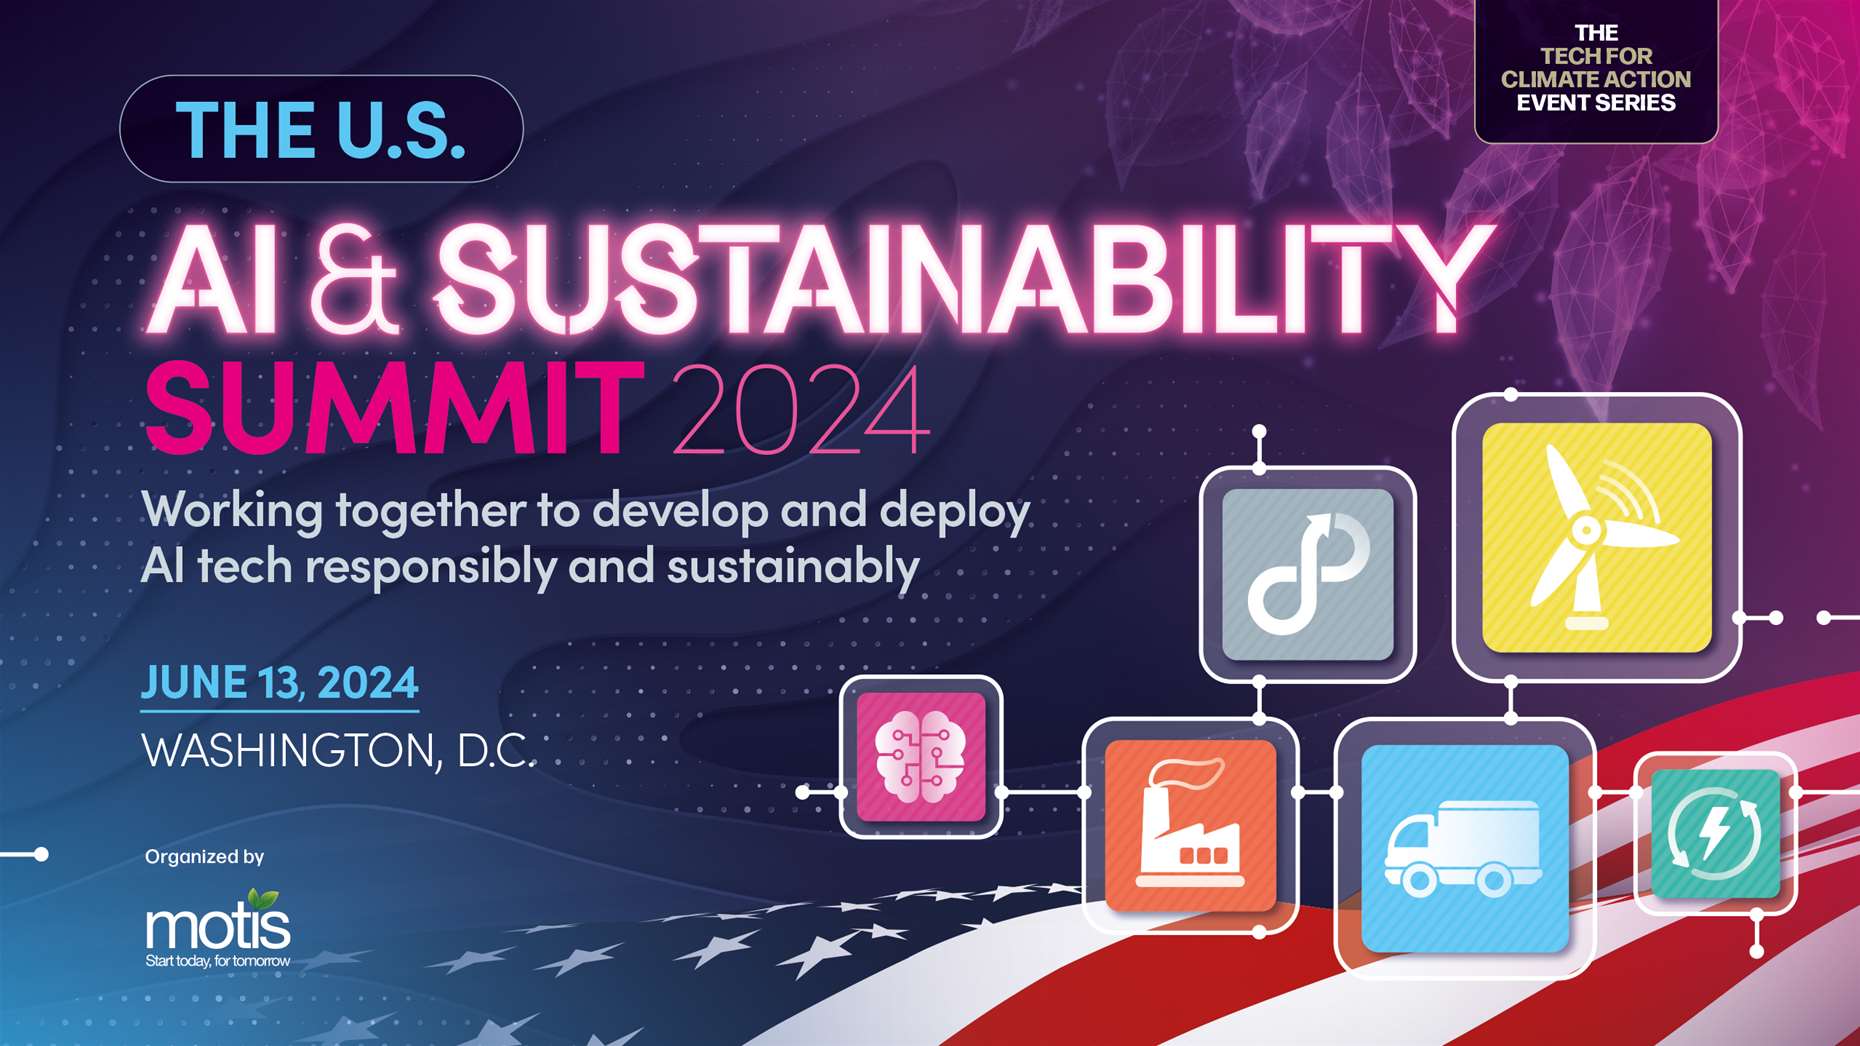 The U.S. AI & Sustainability Summit 